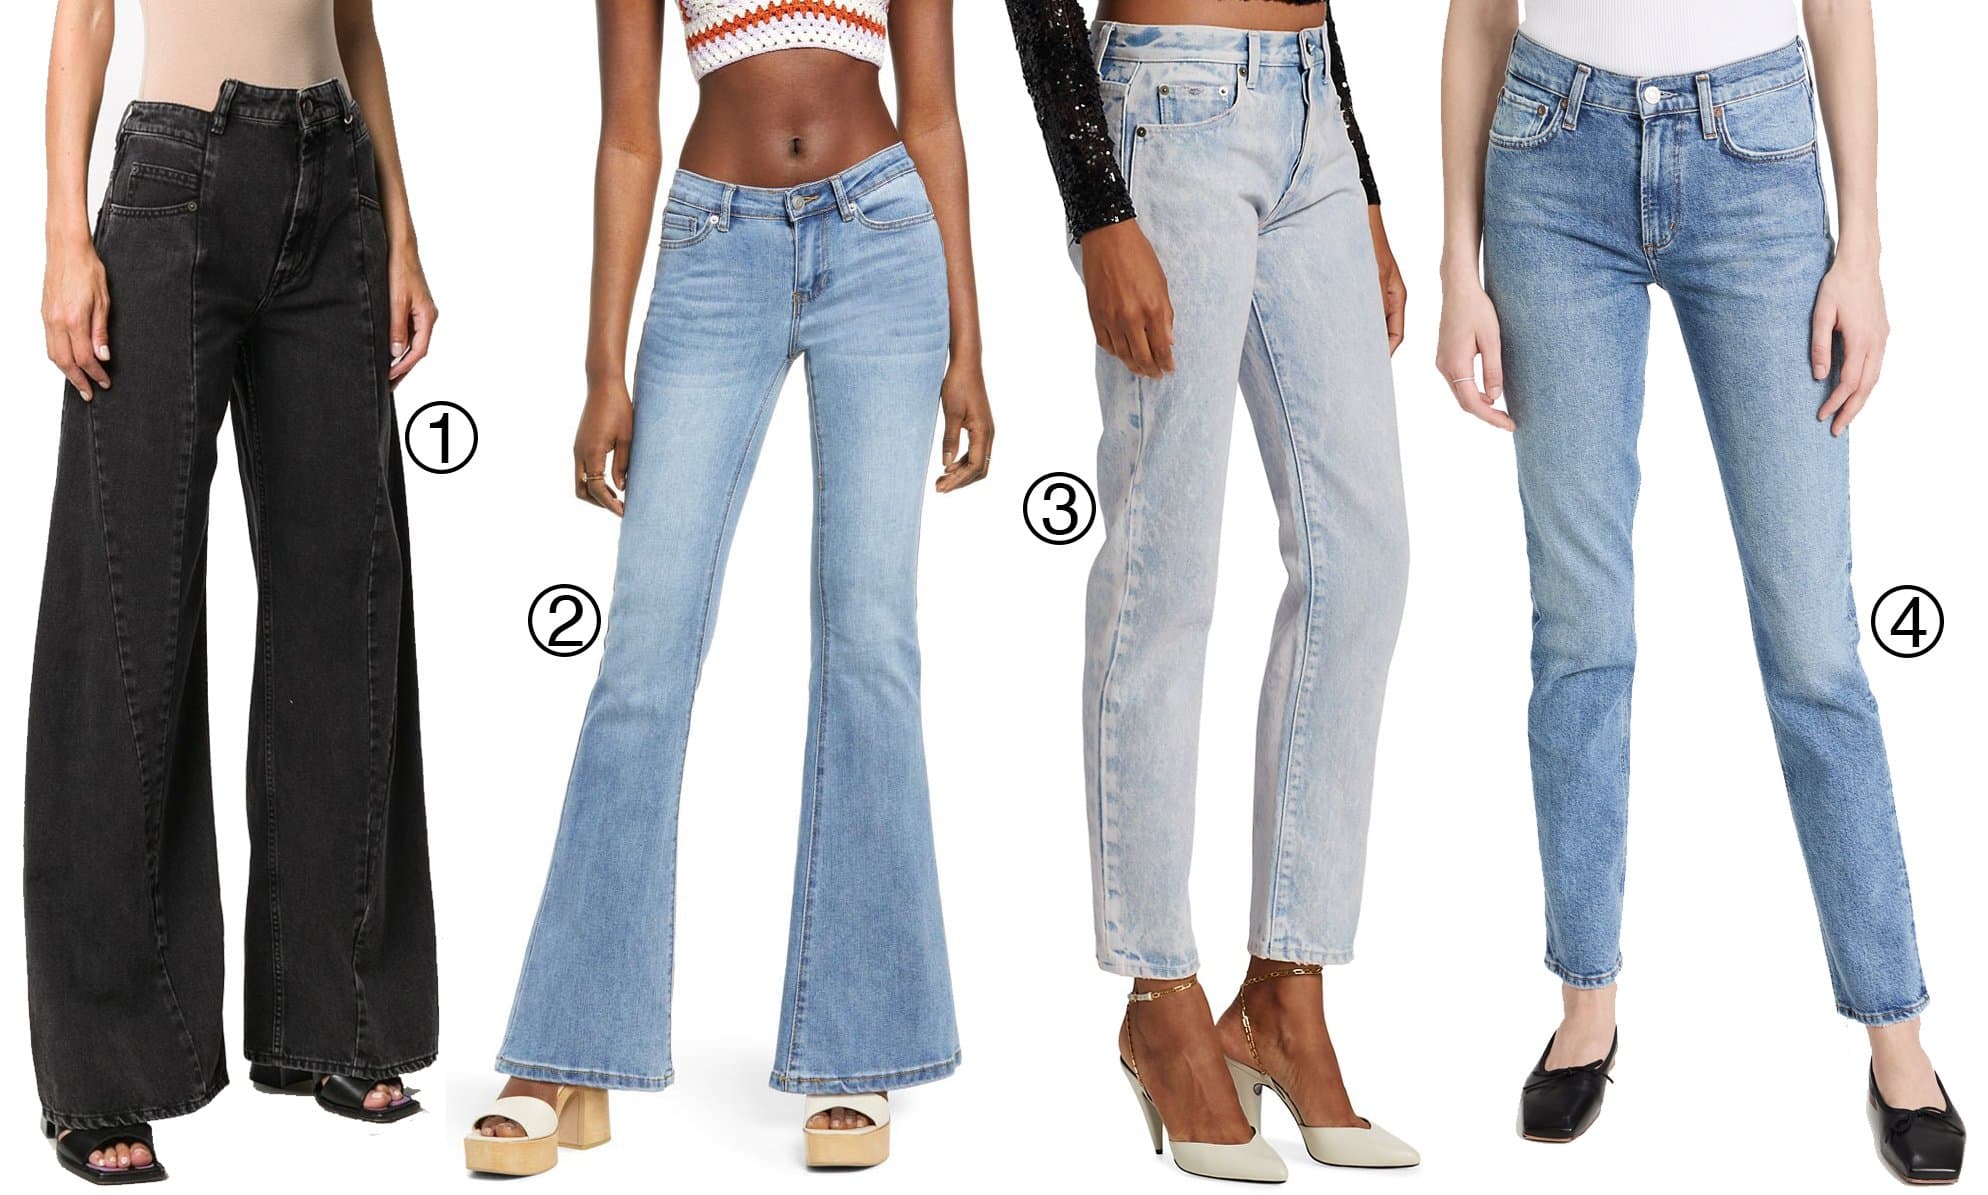 4 Low-rise jeans from Maison Margiela, BP., Saint Laurent and Agolde